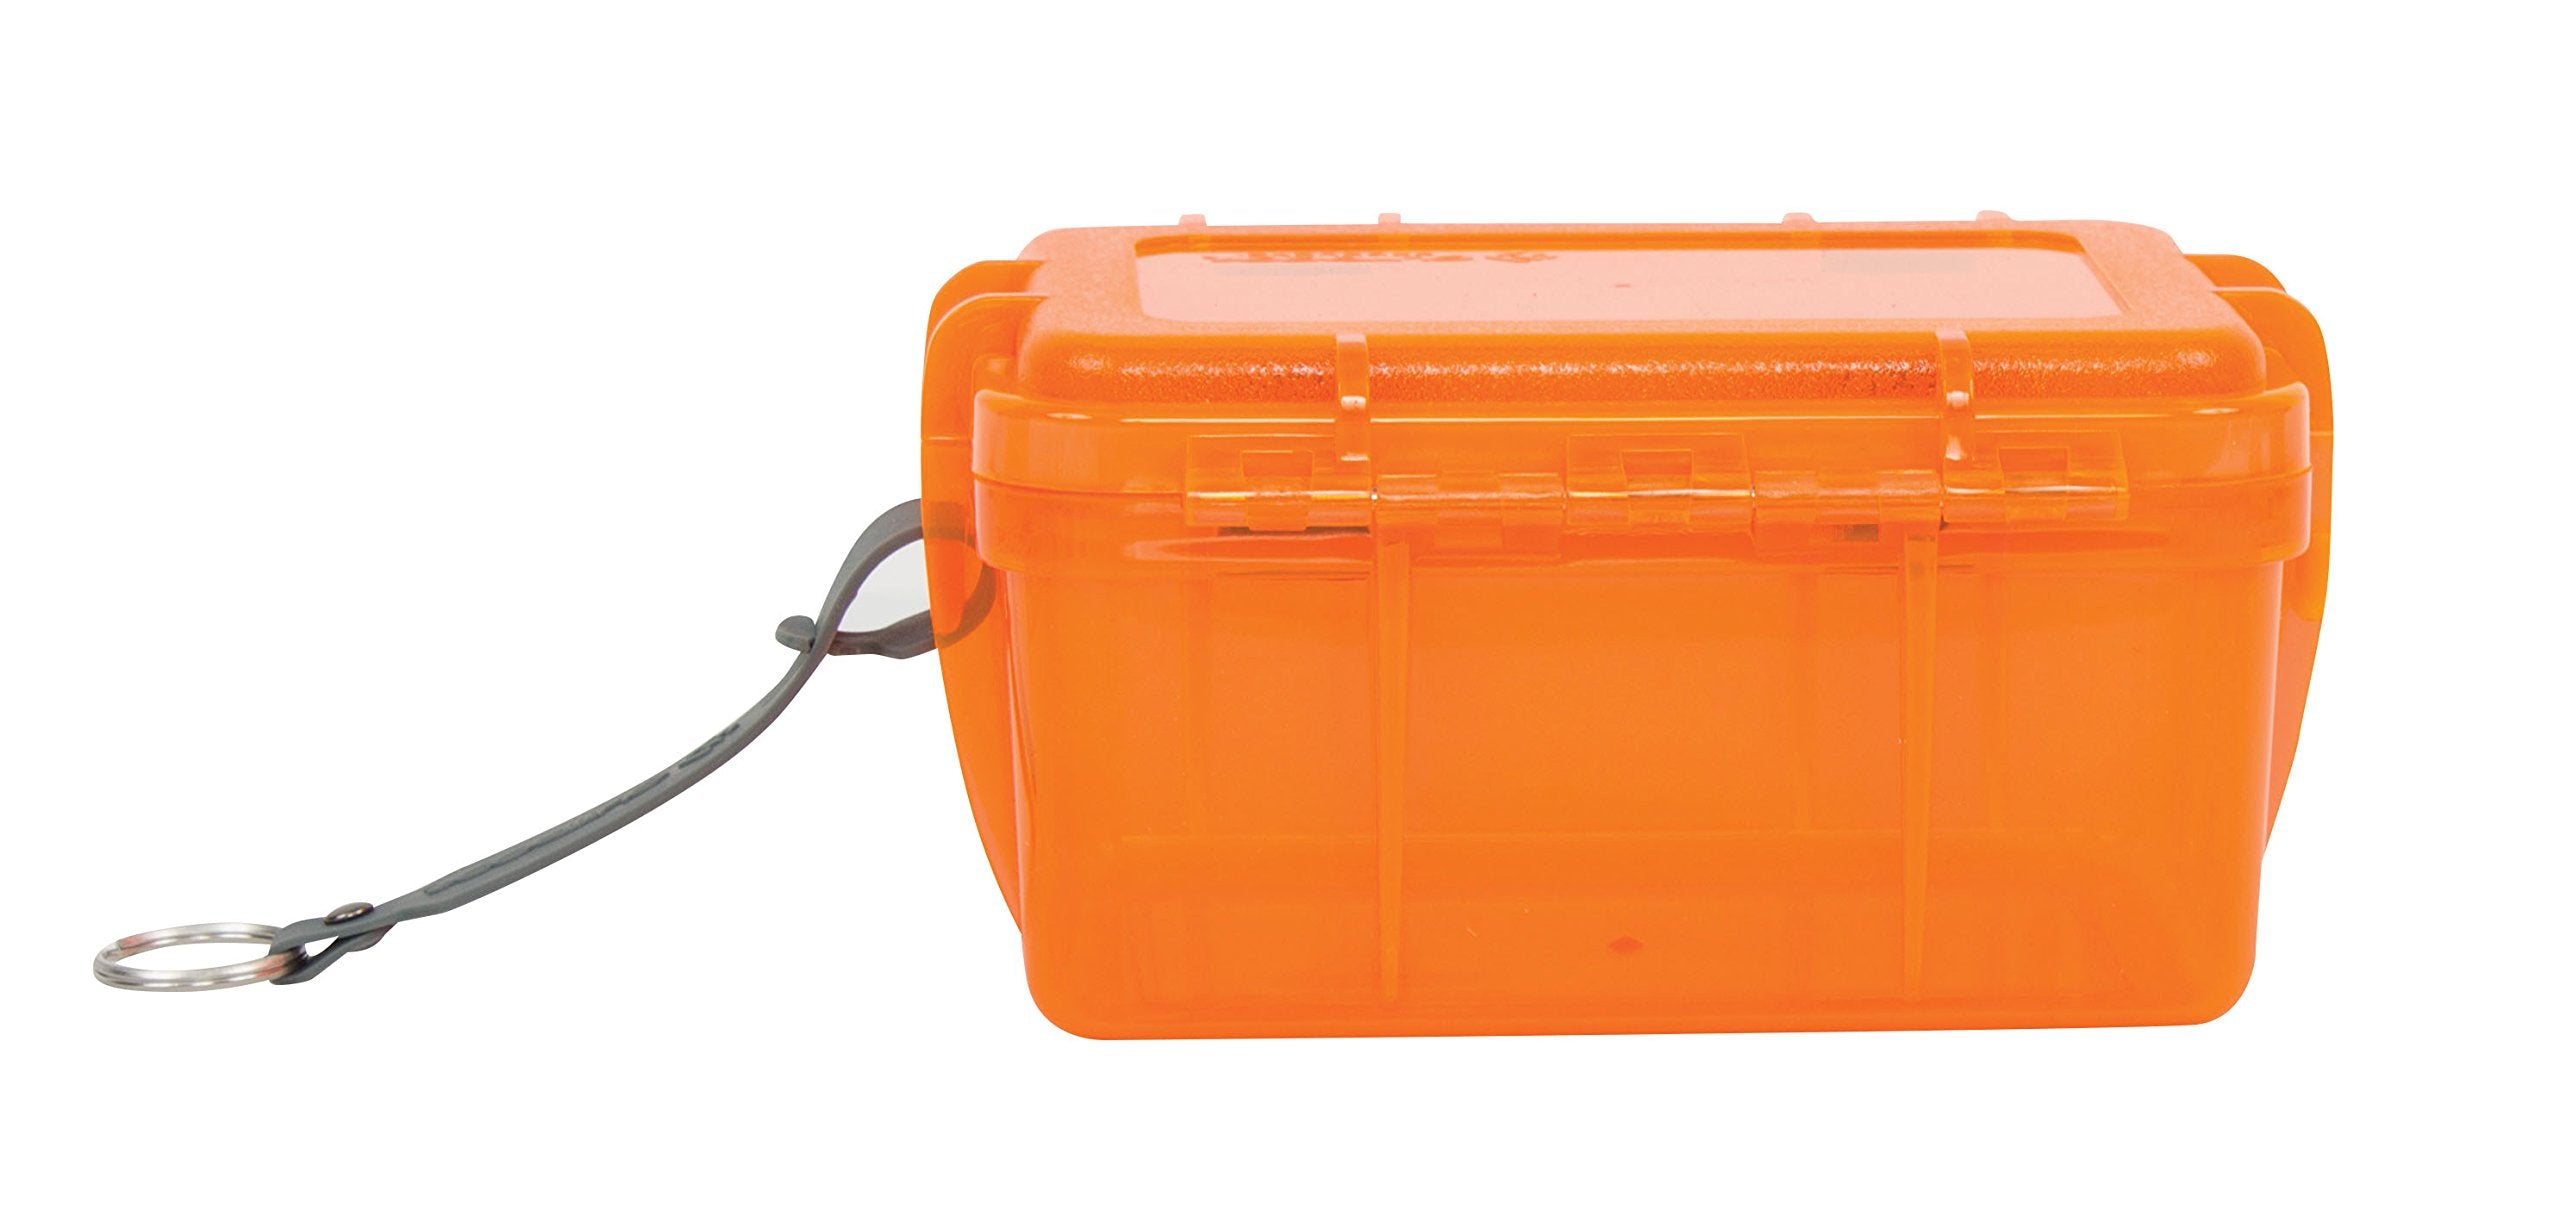 Watertight Box Outdoor,Waterproof Box For Boat,Utility Dry Box,Waterproof  Box